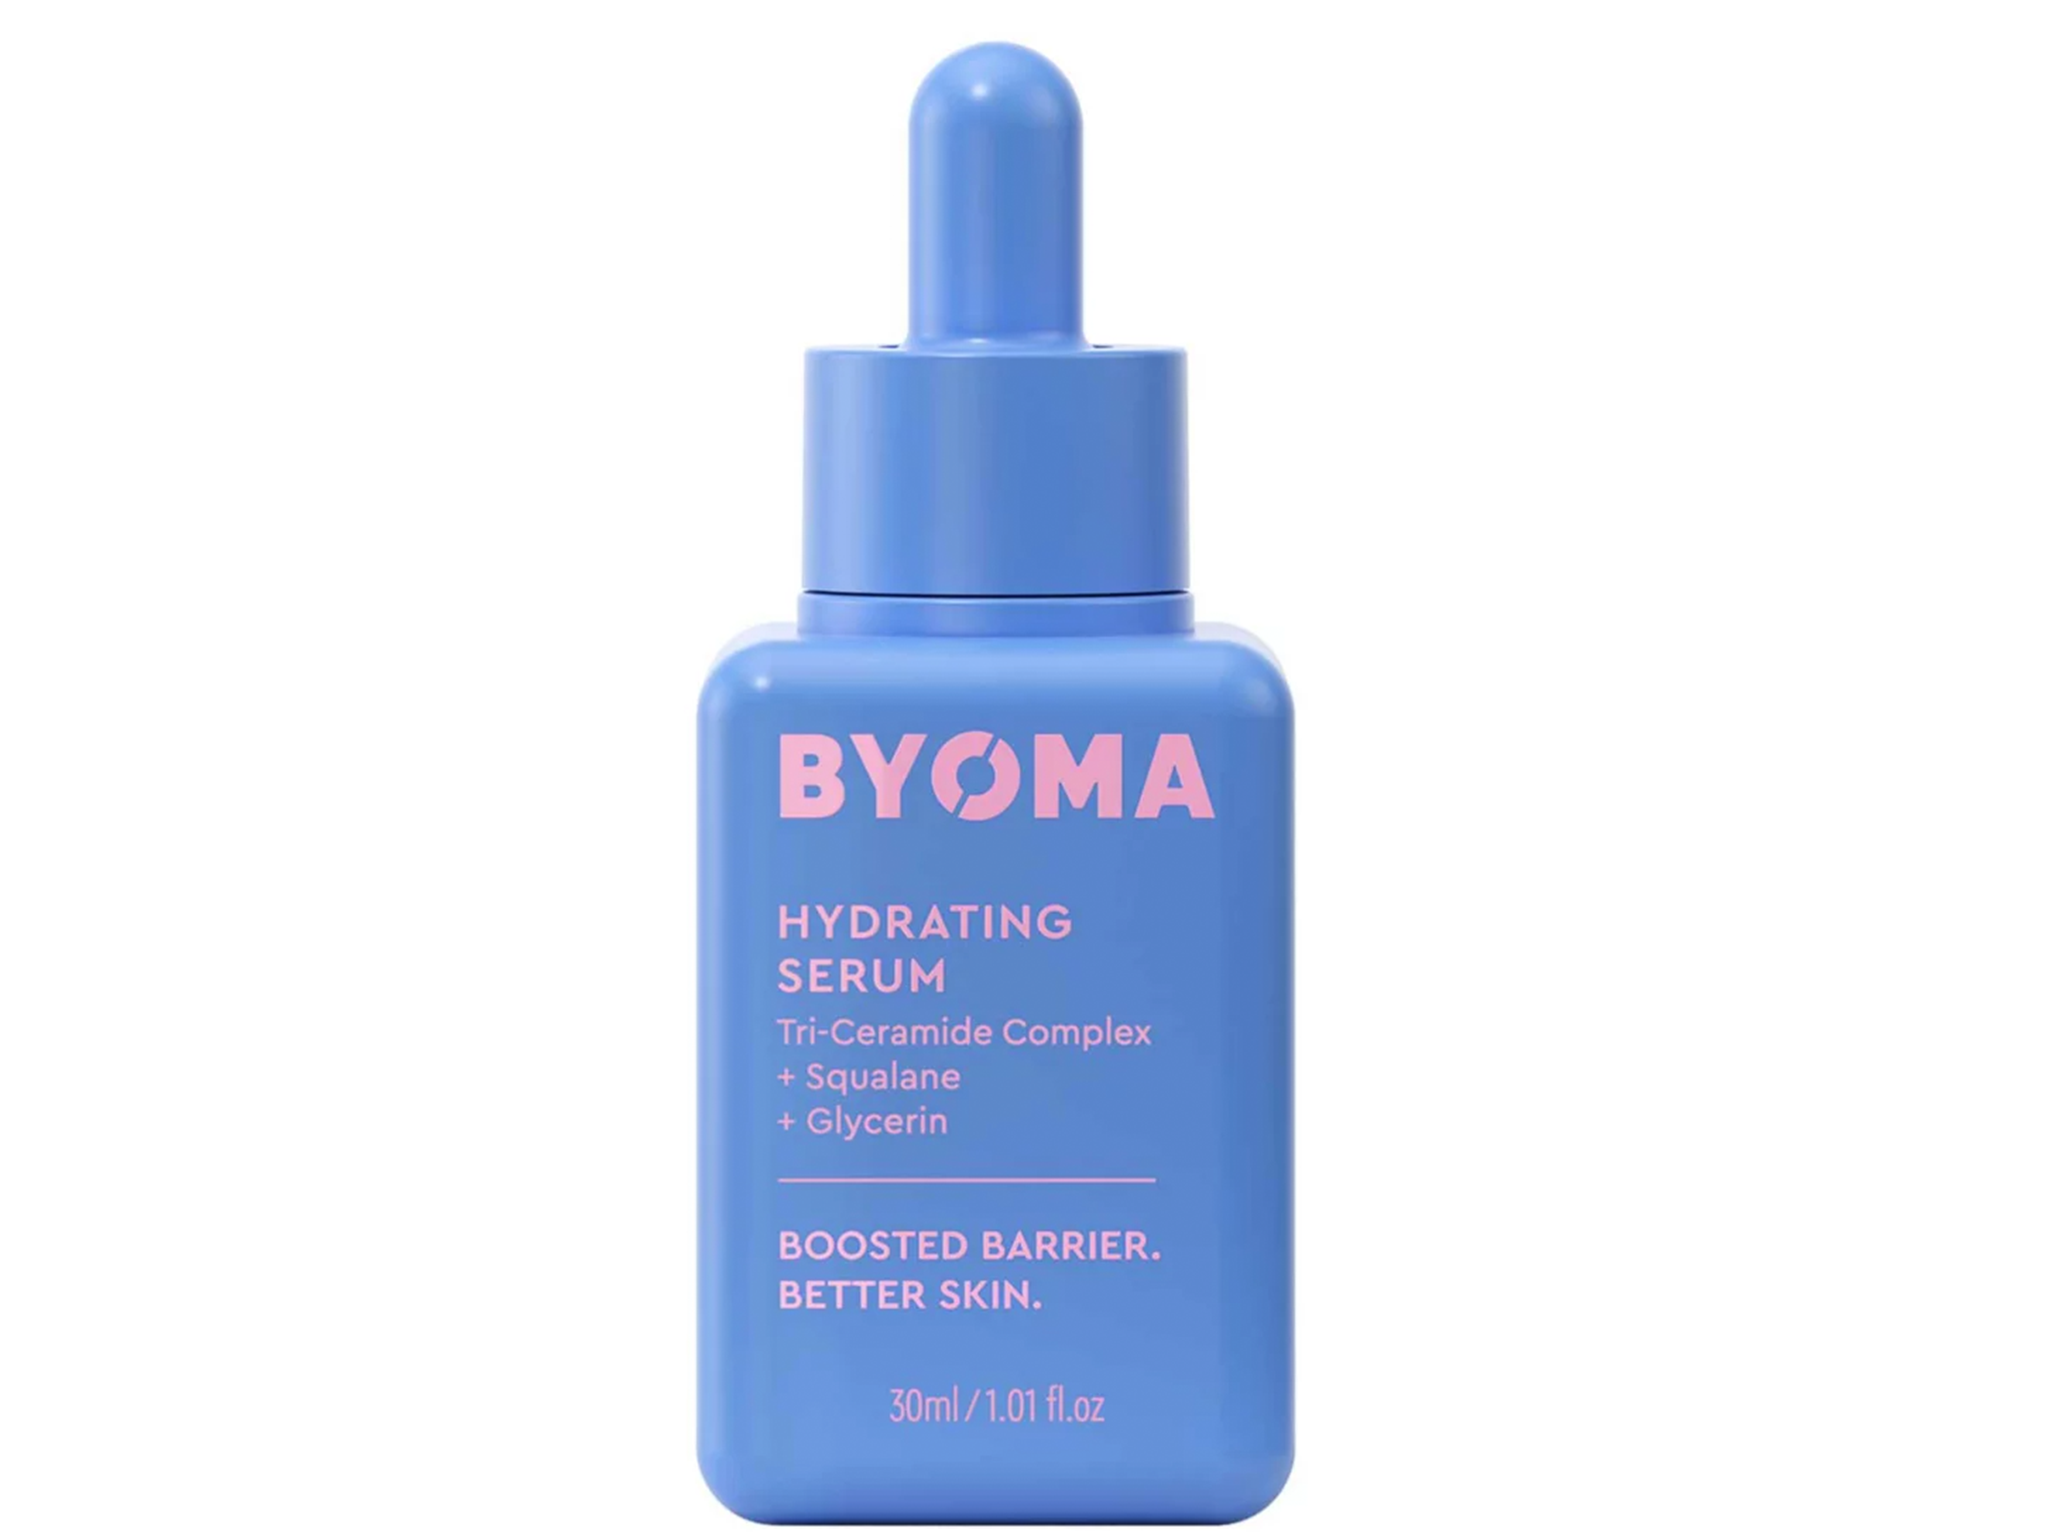 bargain beauty buys Byoma hydrating serum